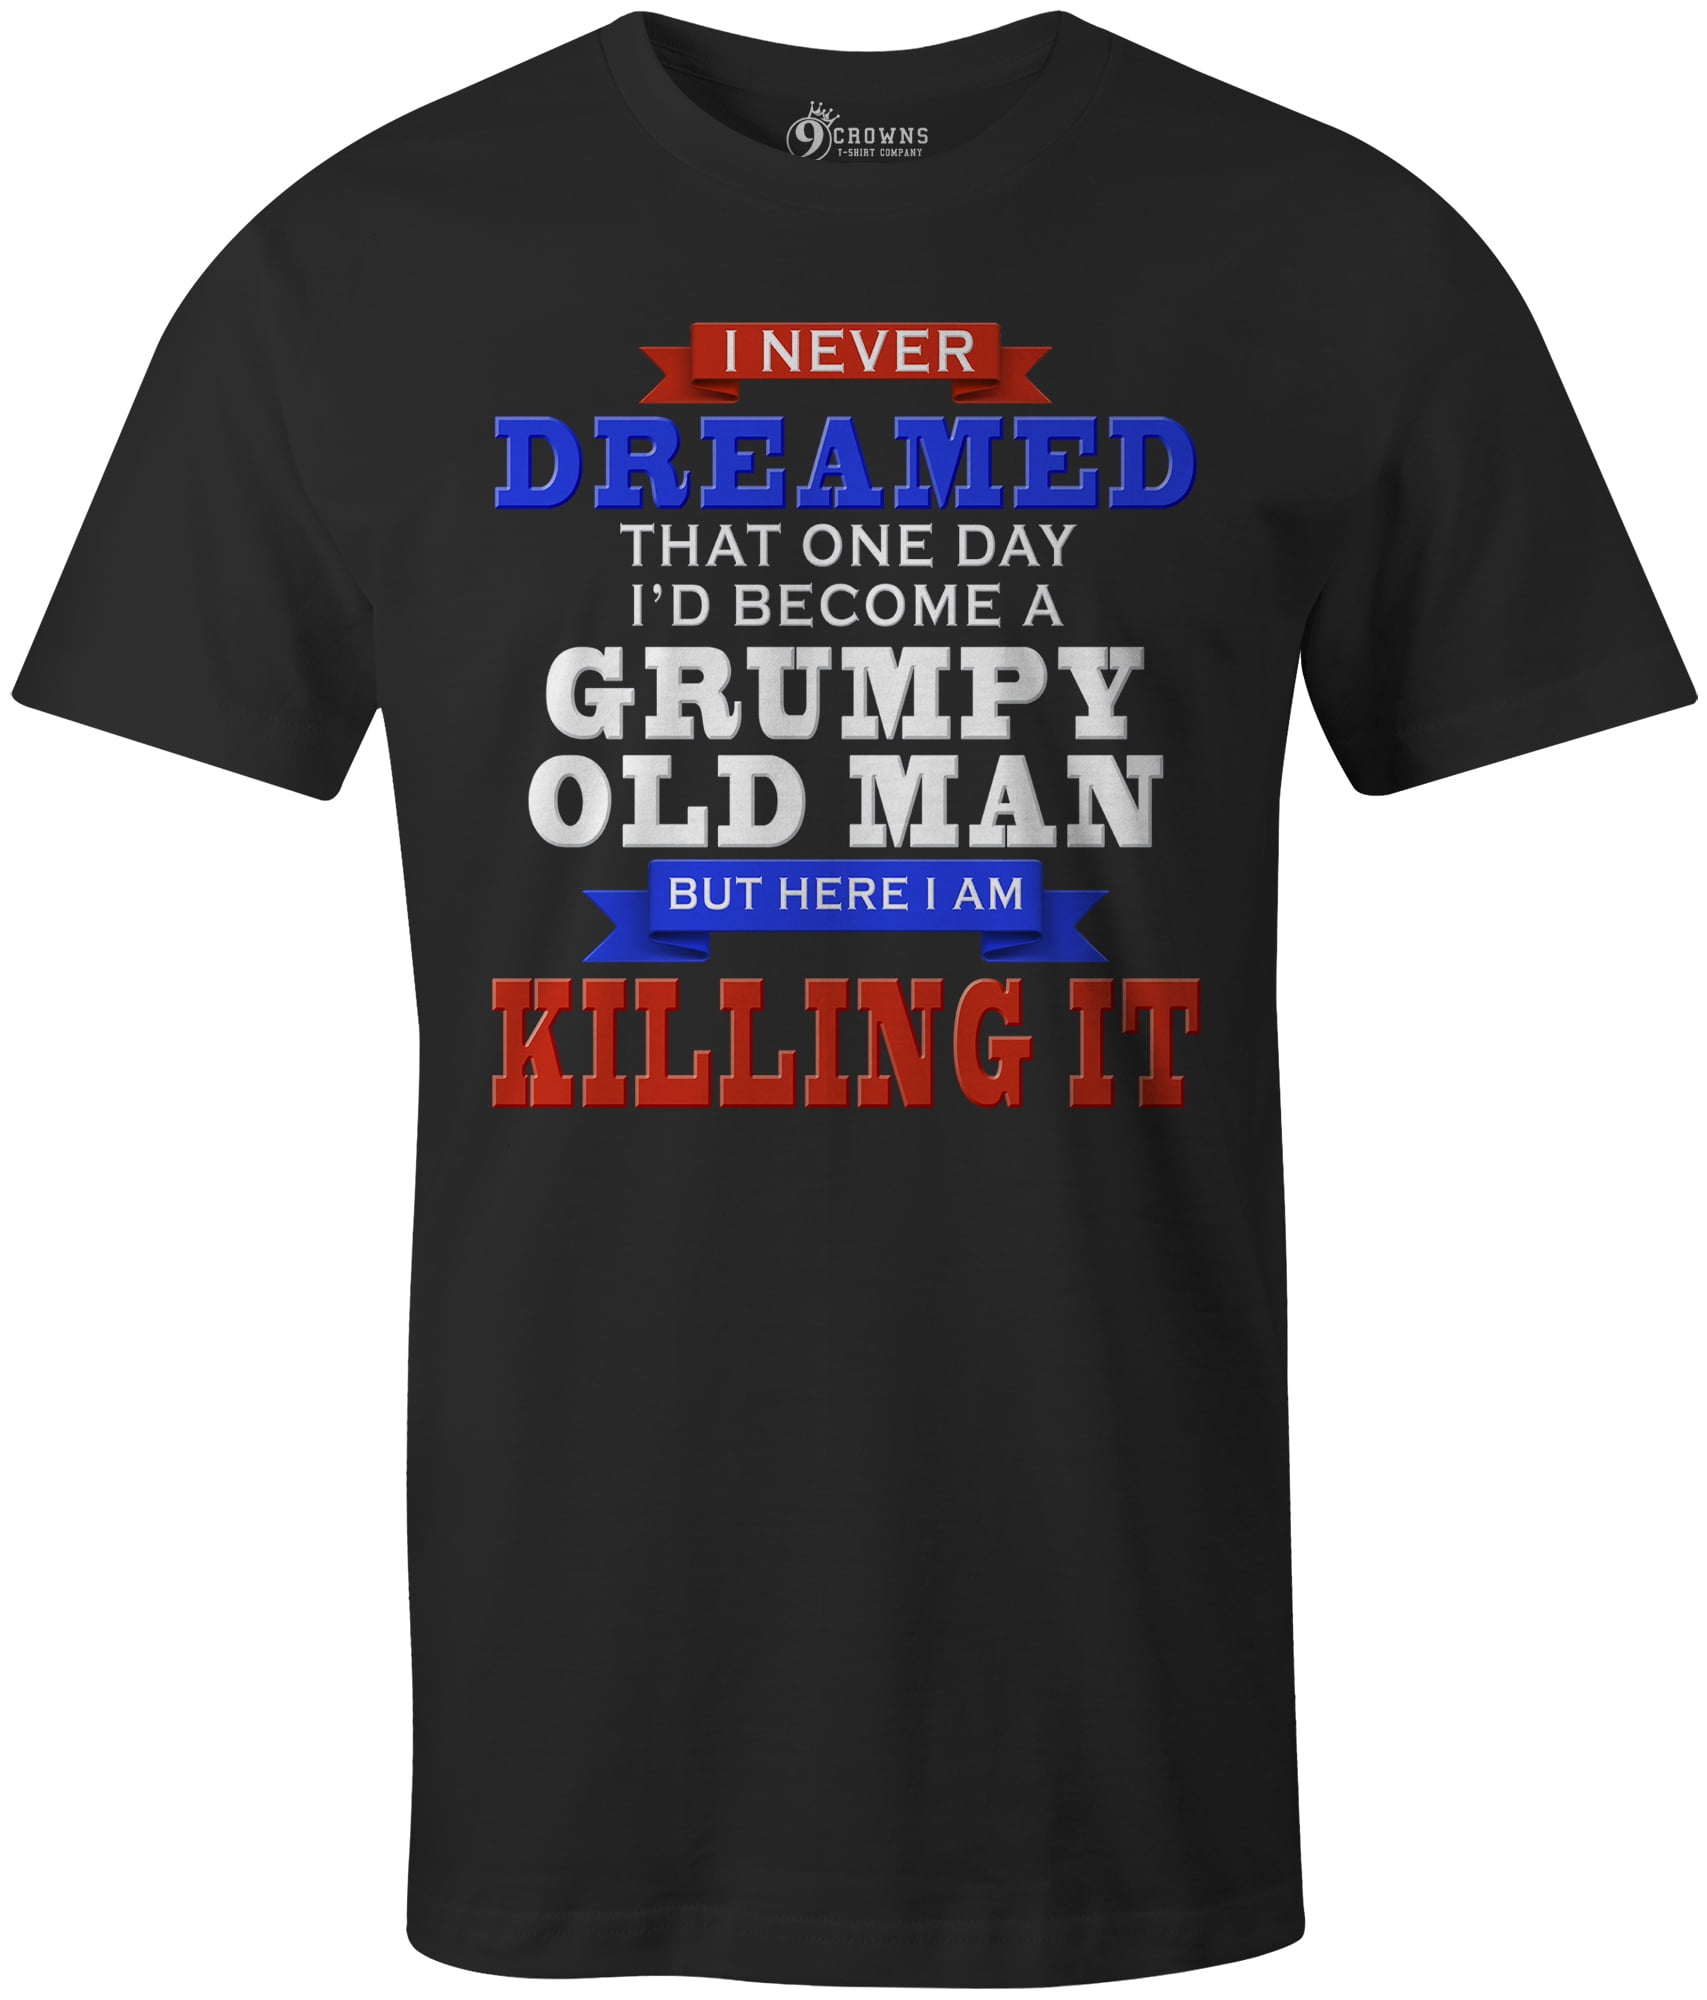 9 Crowns Tees Men's Grumpy Old Man Funny Sarcastic T-Shirt (Black, 3X ...